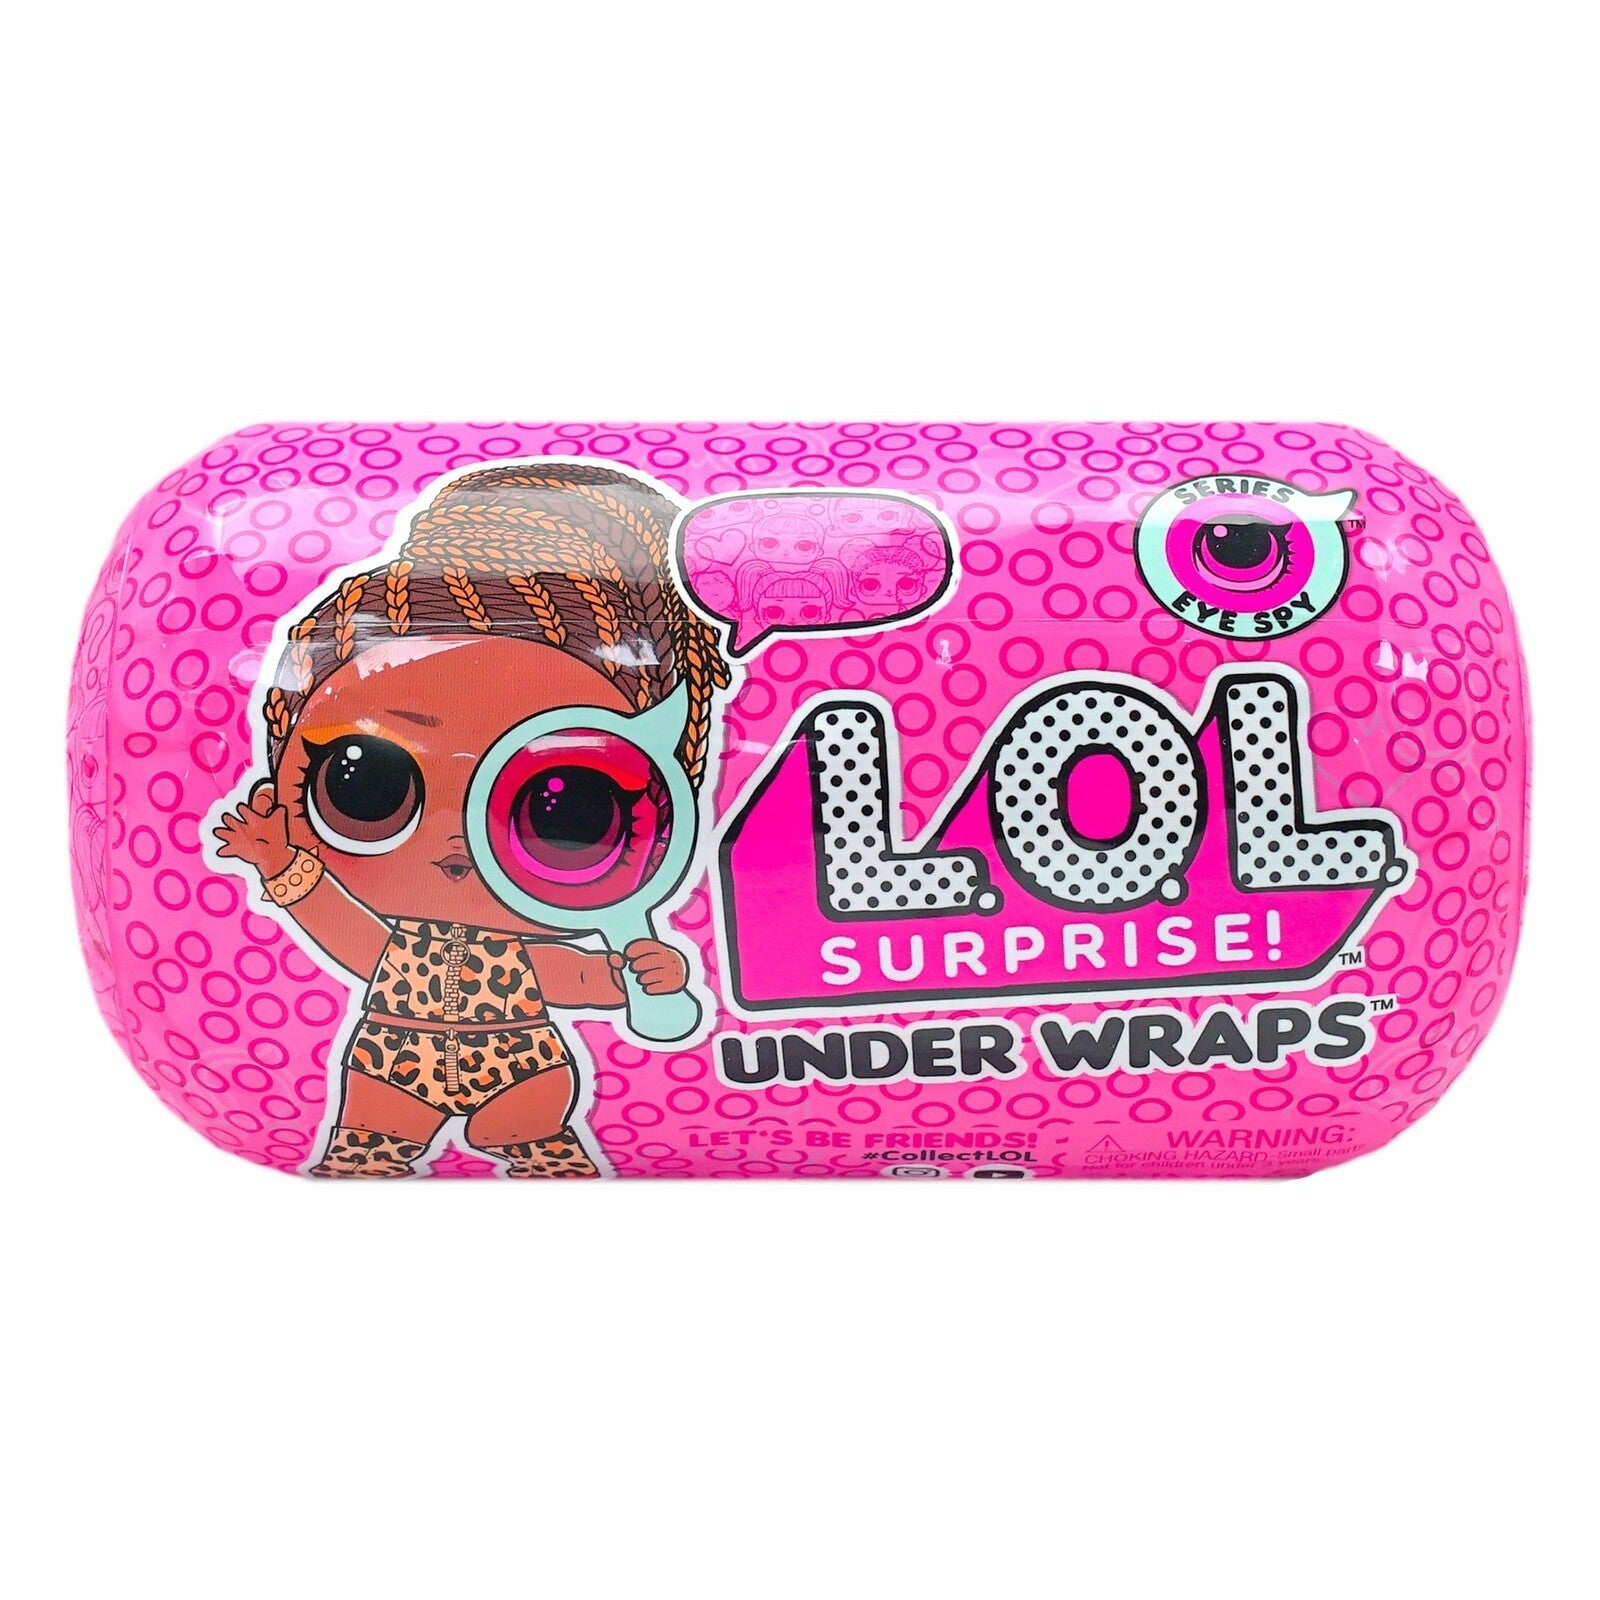 lol under wraps toys center